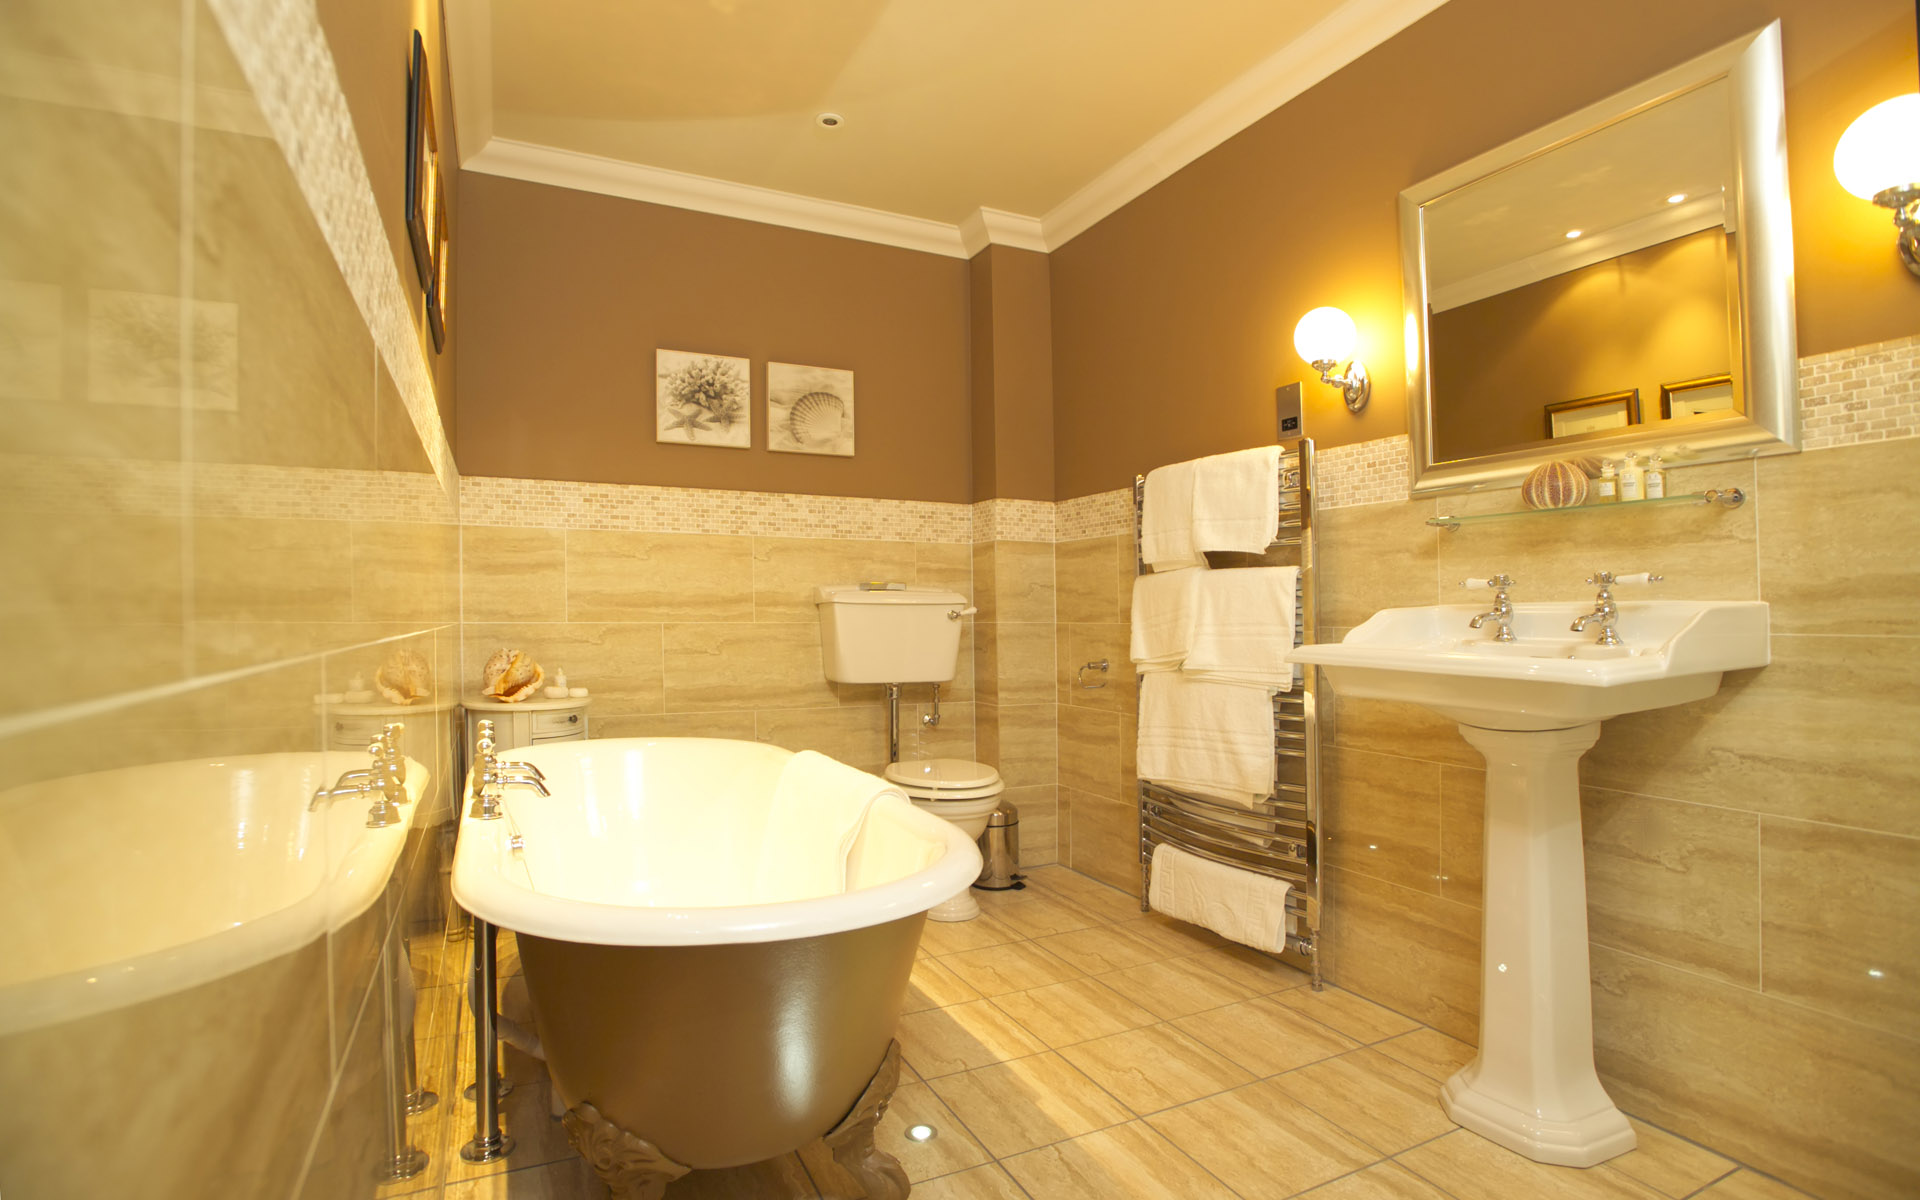 Bathroom Wallpaper Cute Style - Home Interior Design Ideas For Bathroom , HD Wallpaper & Backgrounds